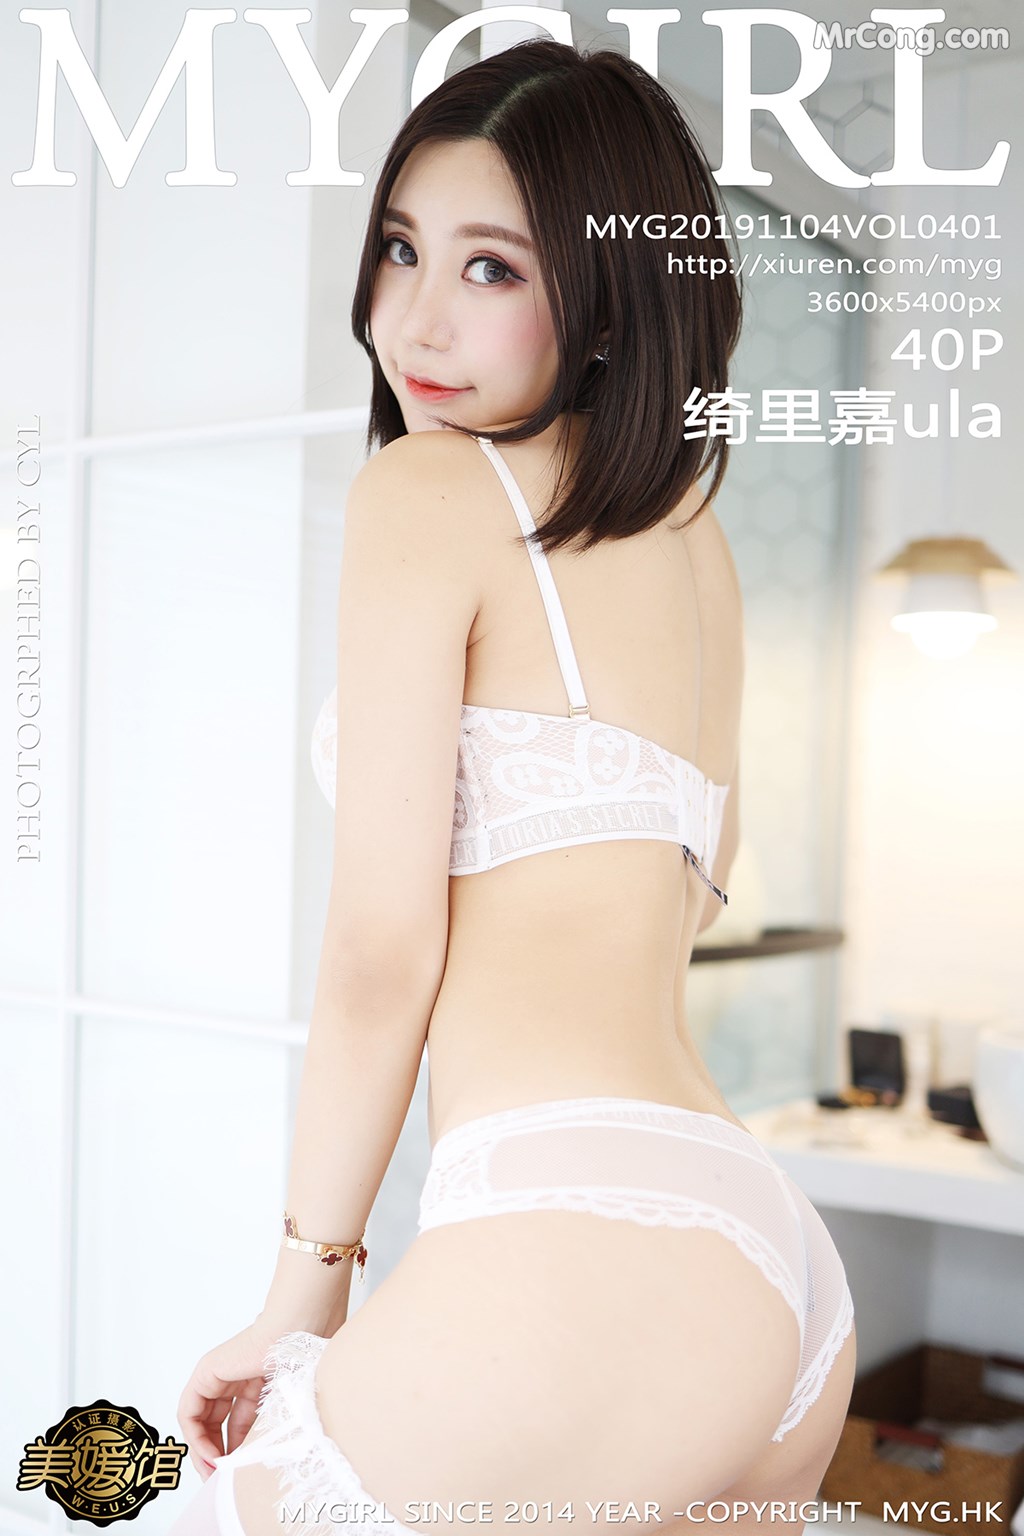 MyGirl Vol.401: 绮 里 嘉 ula (41 pictures)